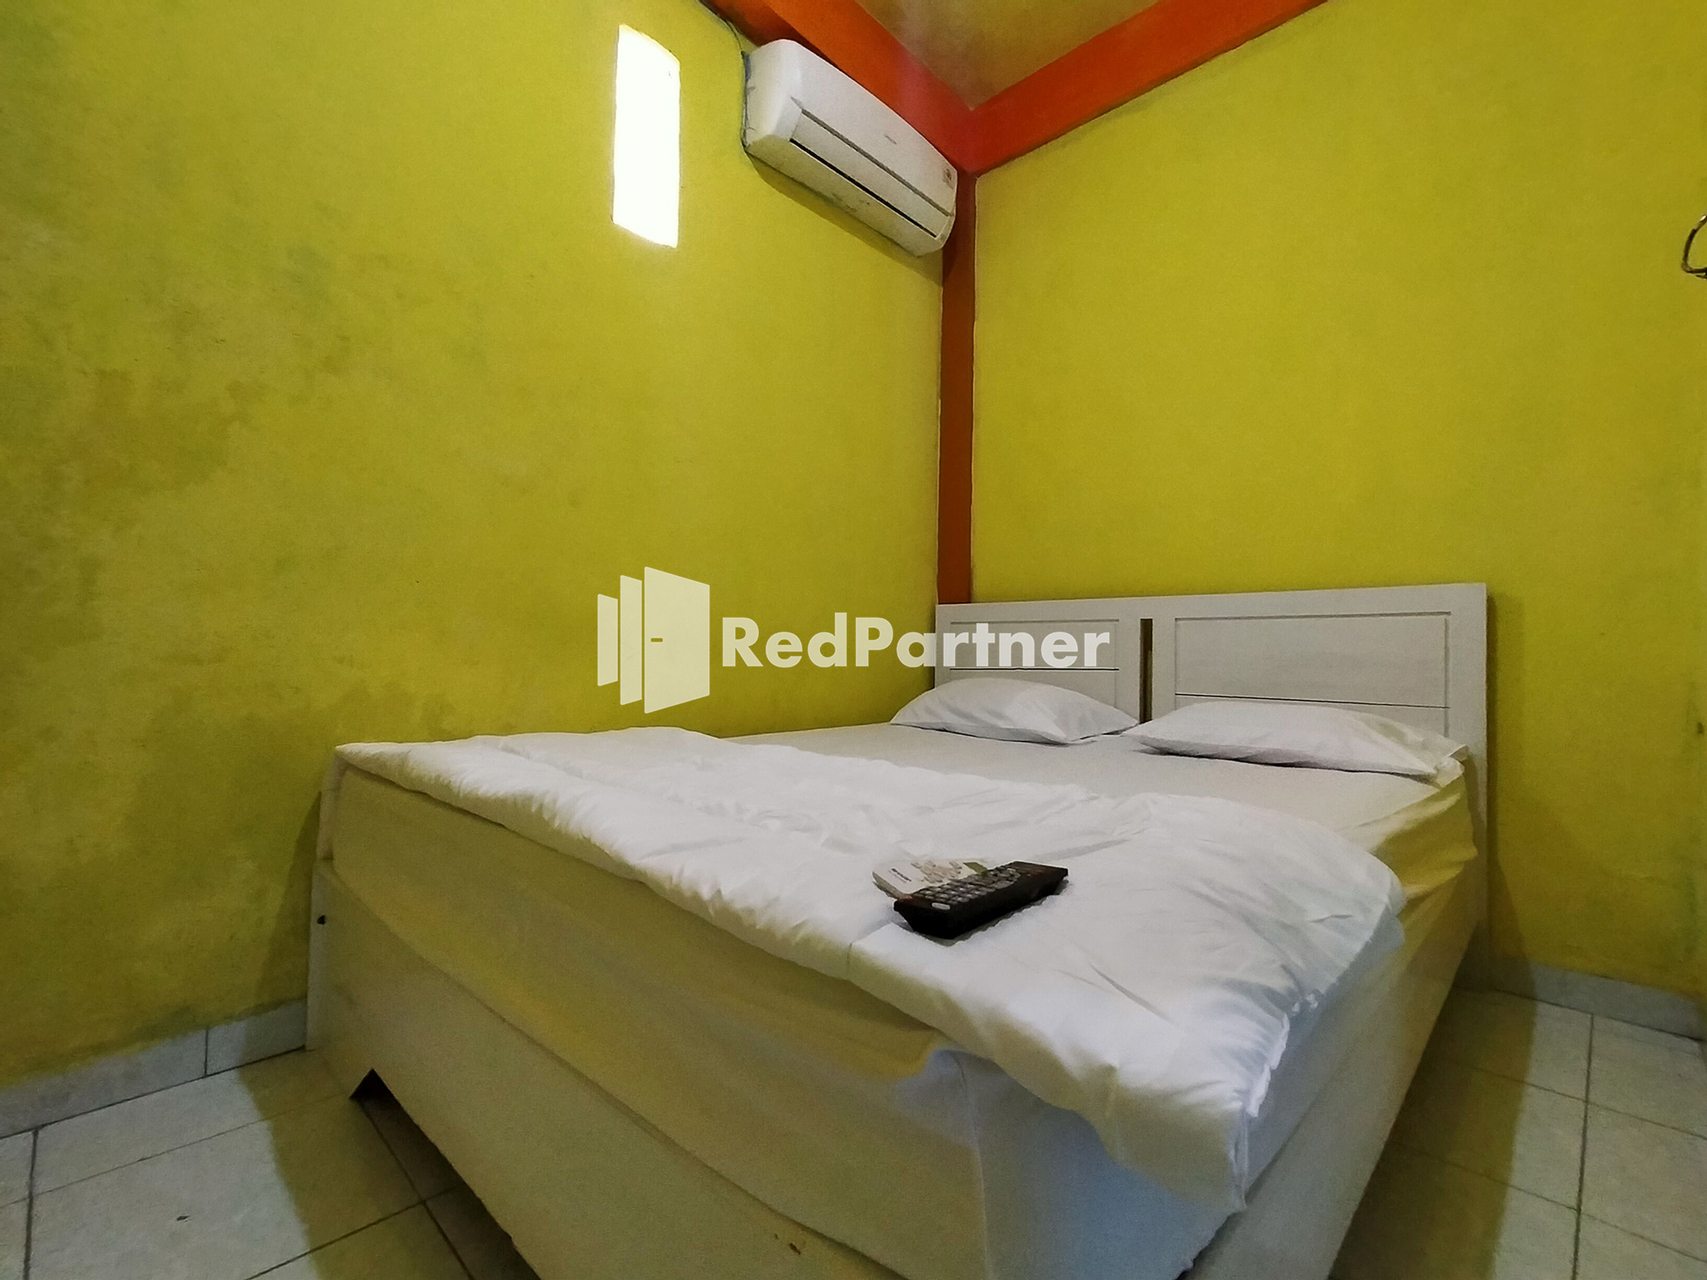 Bedroom 1, Hotel Hing Amimah RedPartner, Bau-Bau